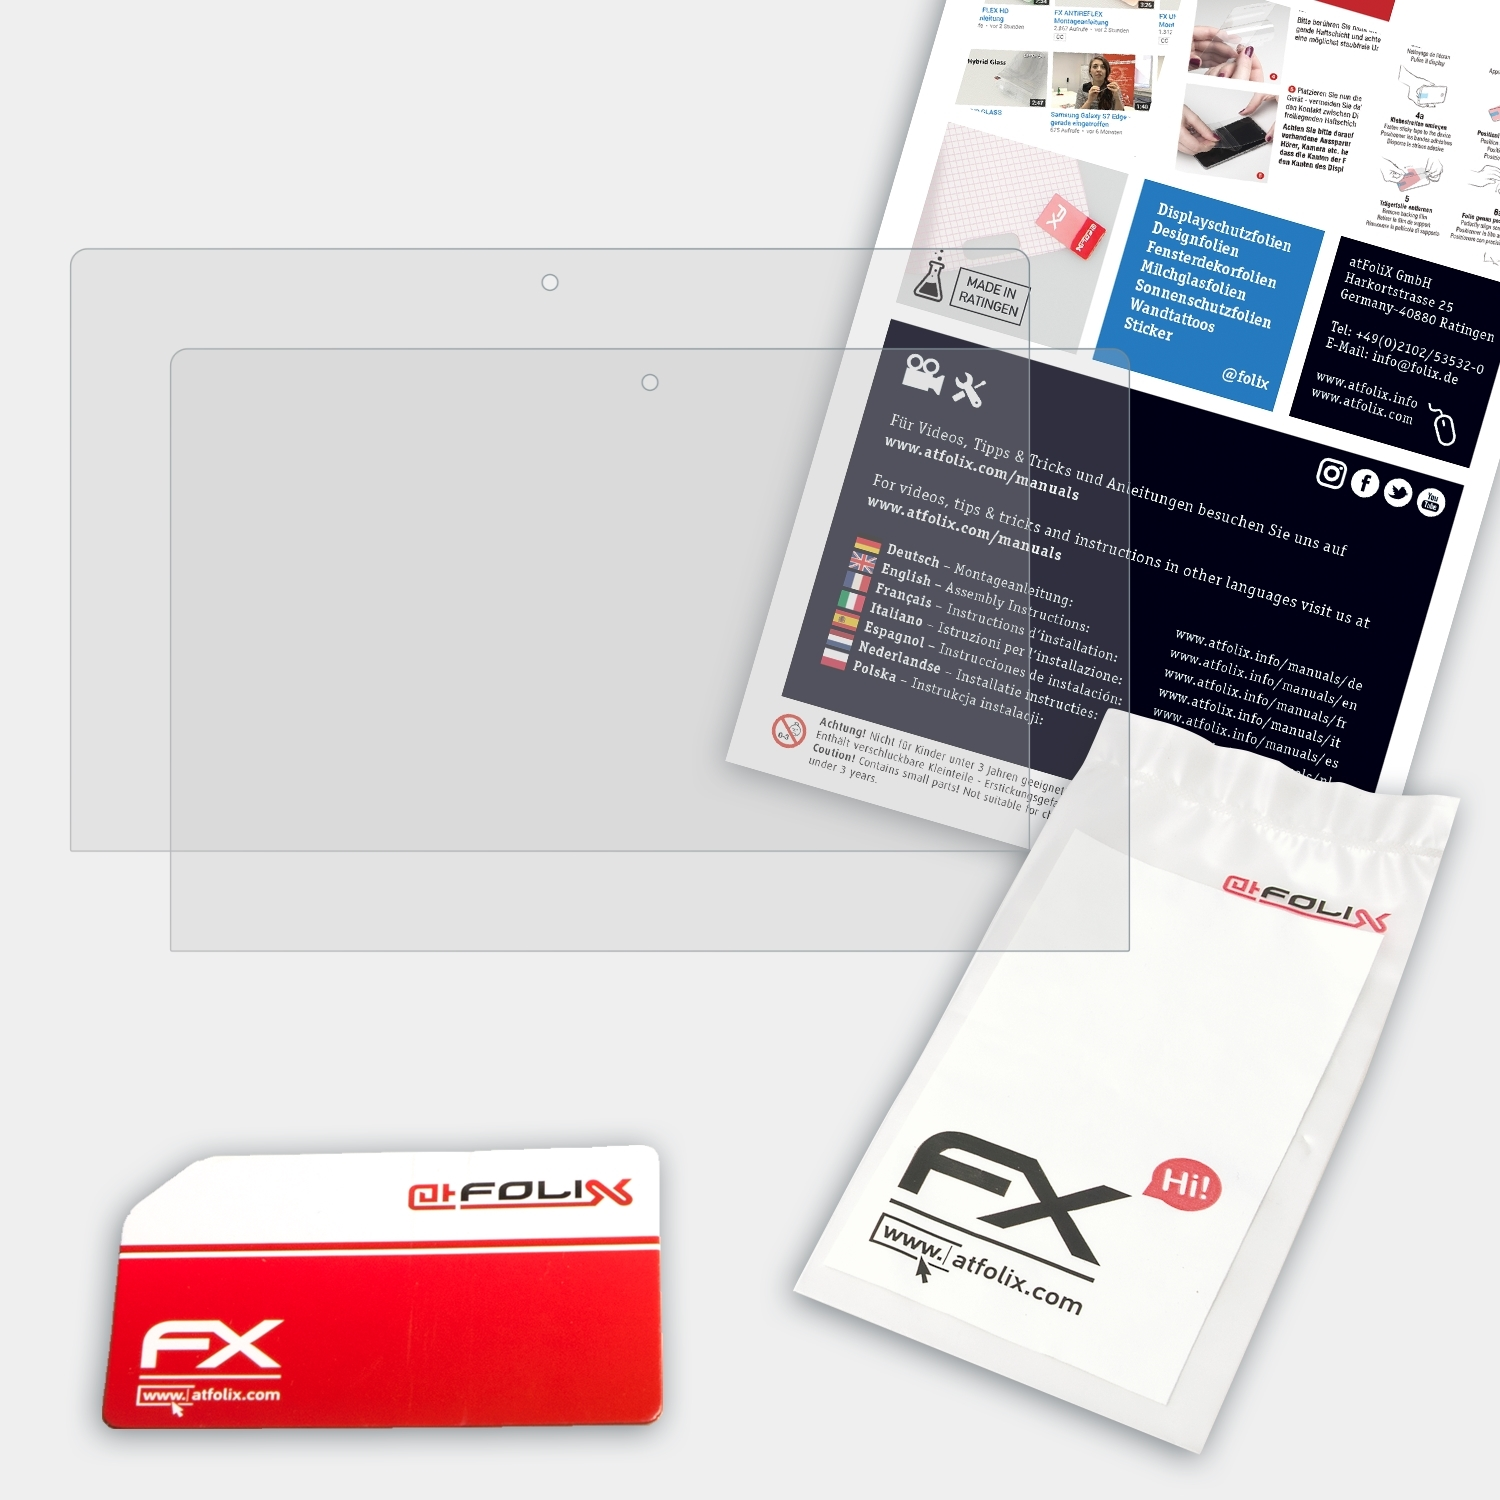 IdeaPad Lenovo 2 Displayschutz(für Yoga 11) 2x FX-Antireflex ATFOLIX